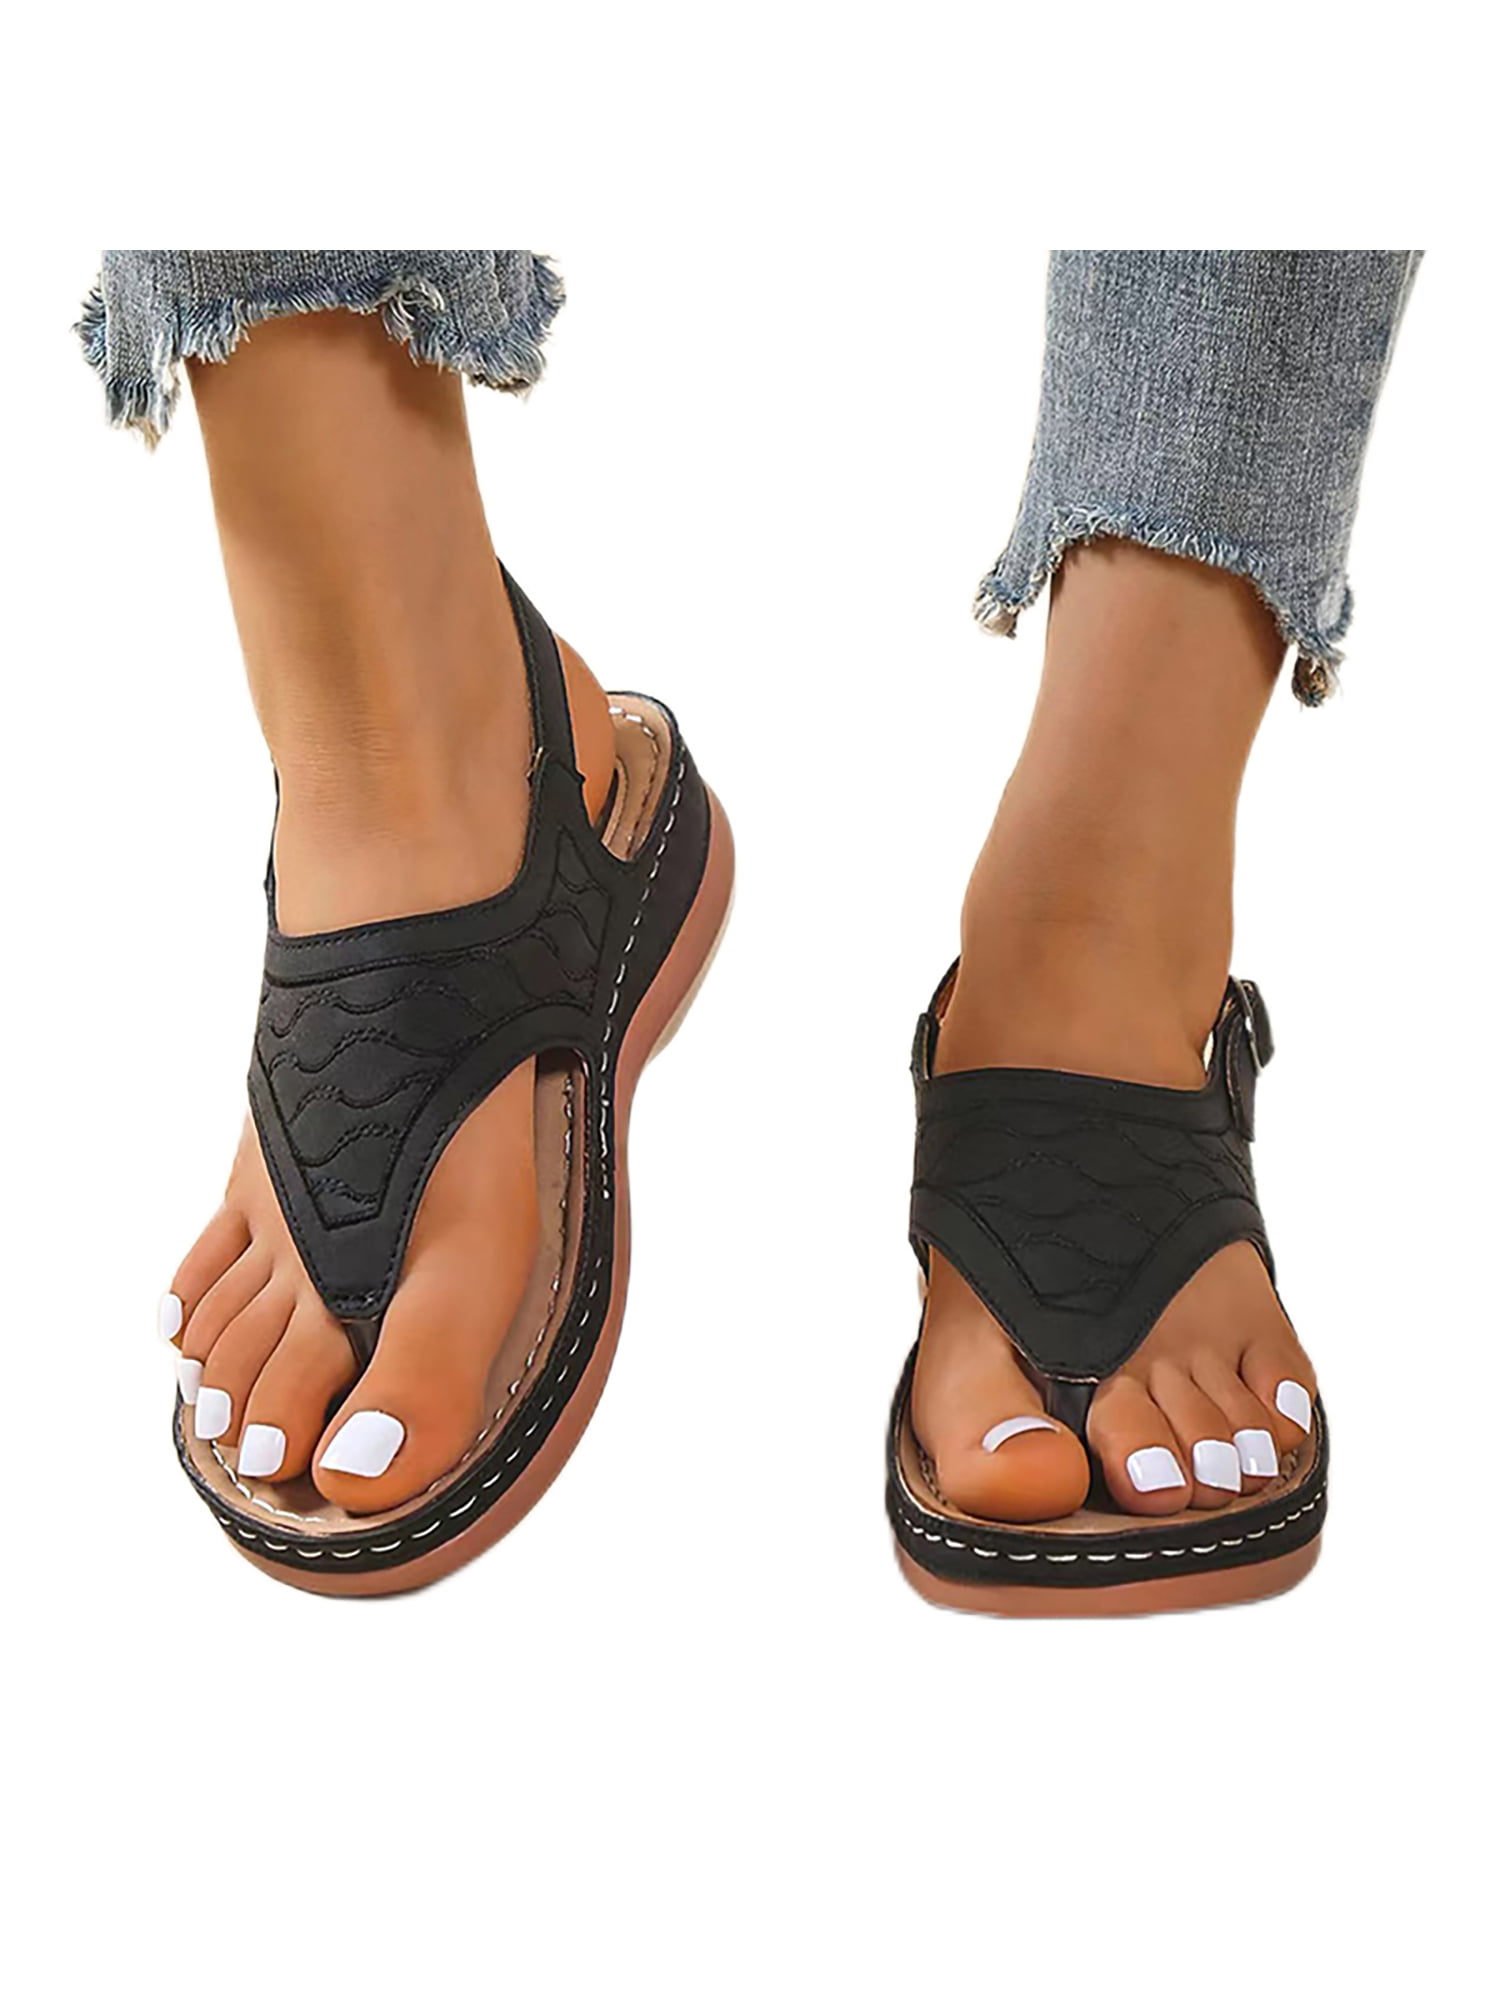 Men's Gladiator Faux Leather Sandals Shoes Formal Open Toe Sports Zip Walking L